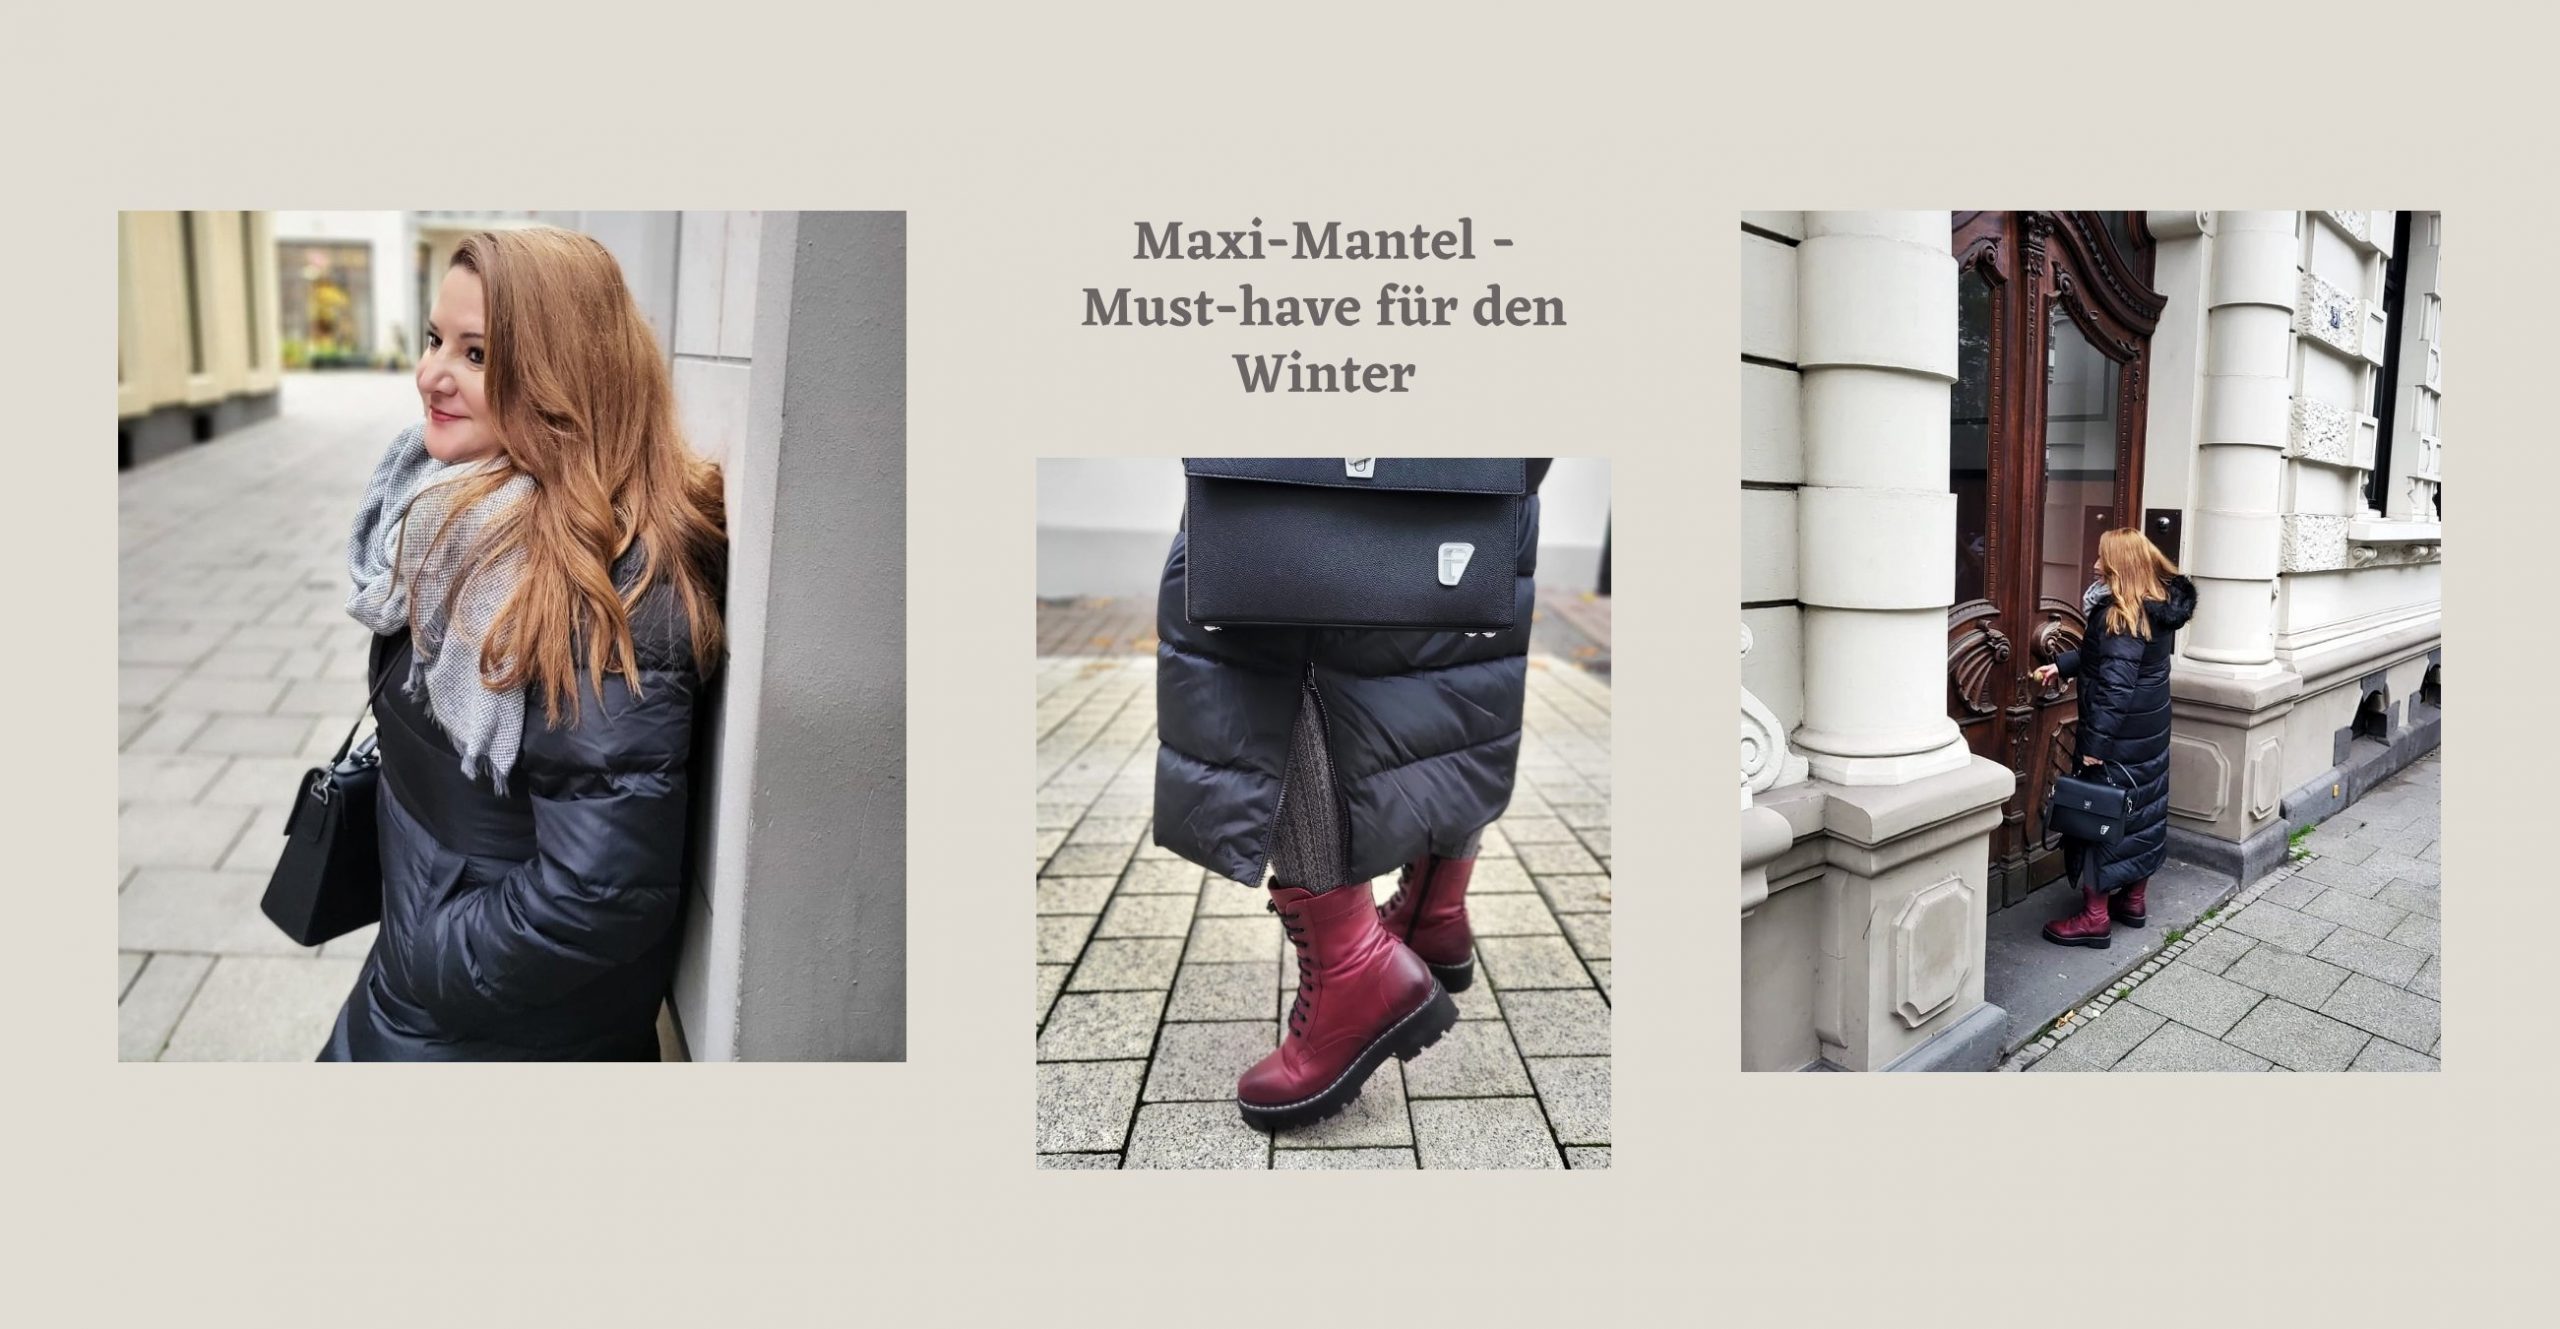 Maxi-Mantel als Must-have für den Winter - Pretty You